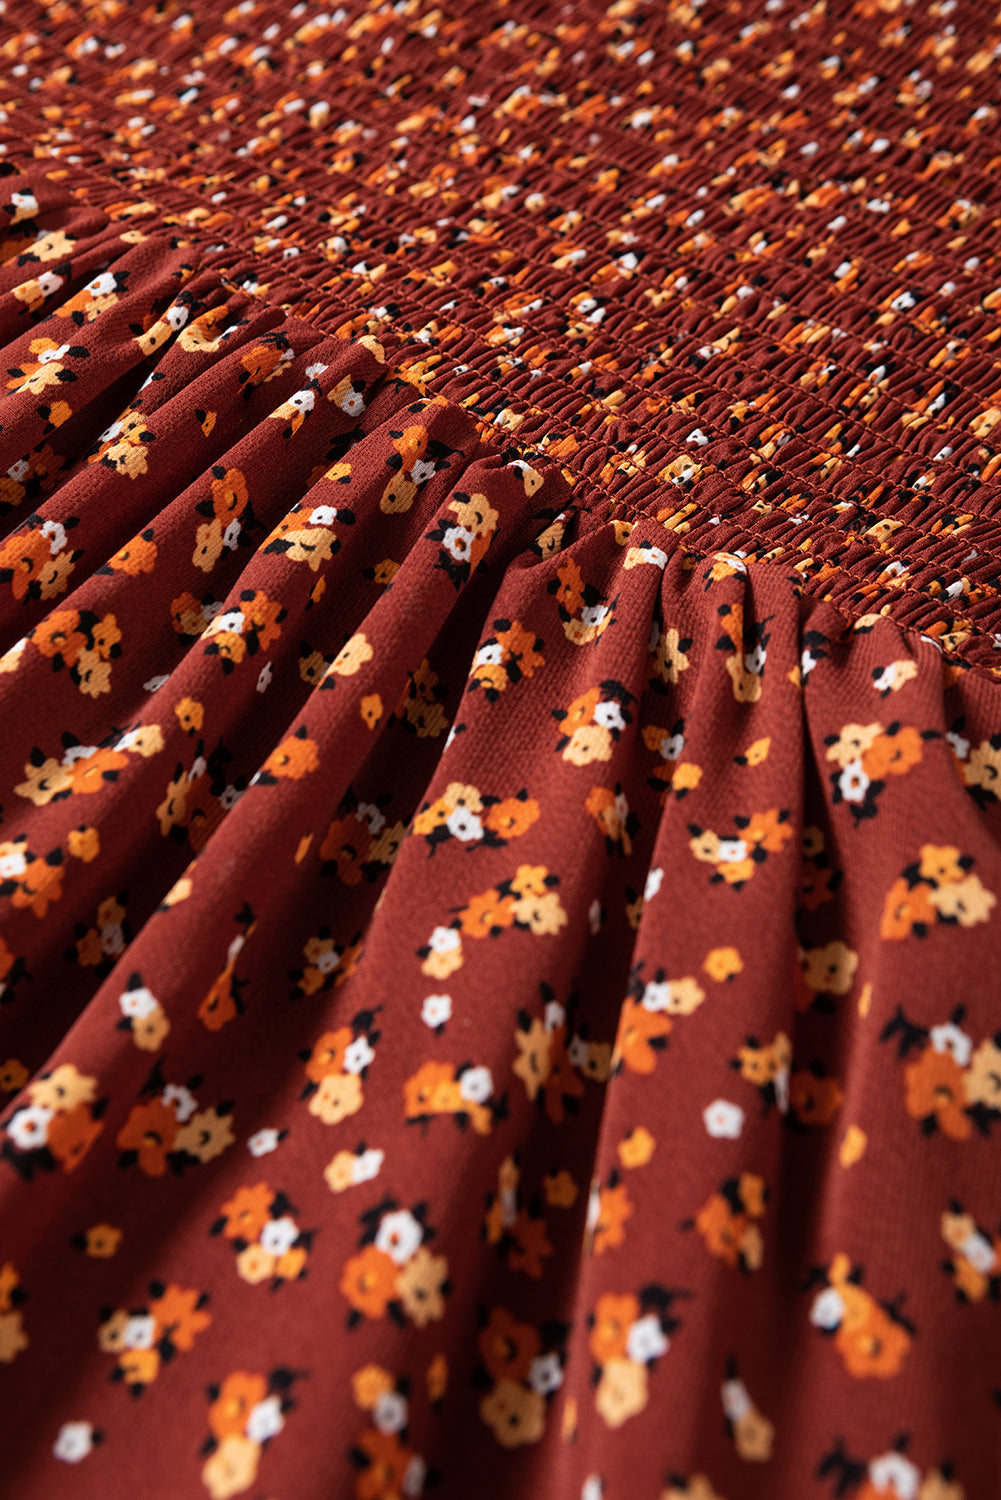 Mini-robe marron à corsage smocké et fleuri